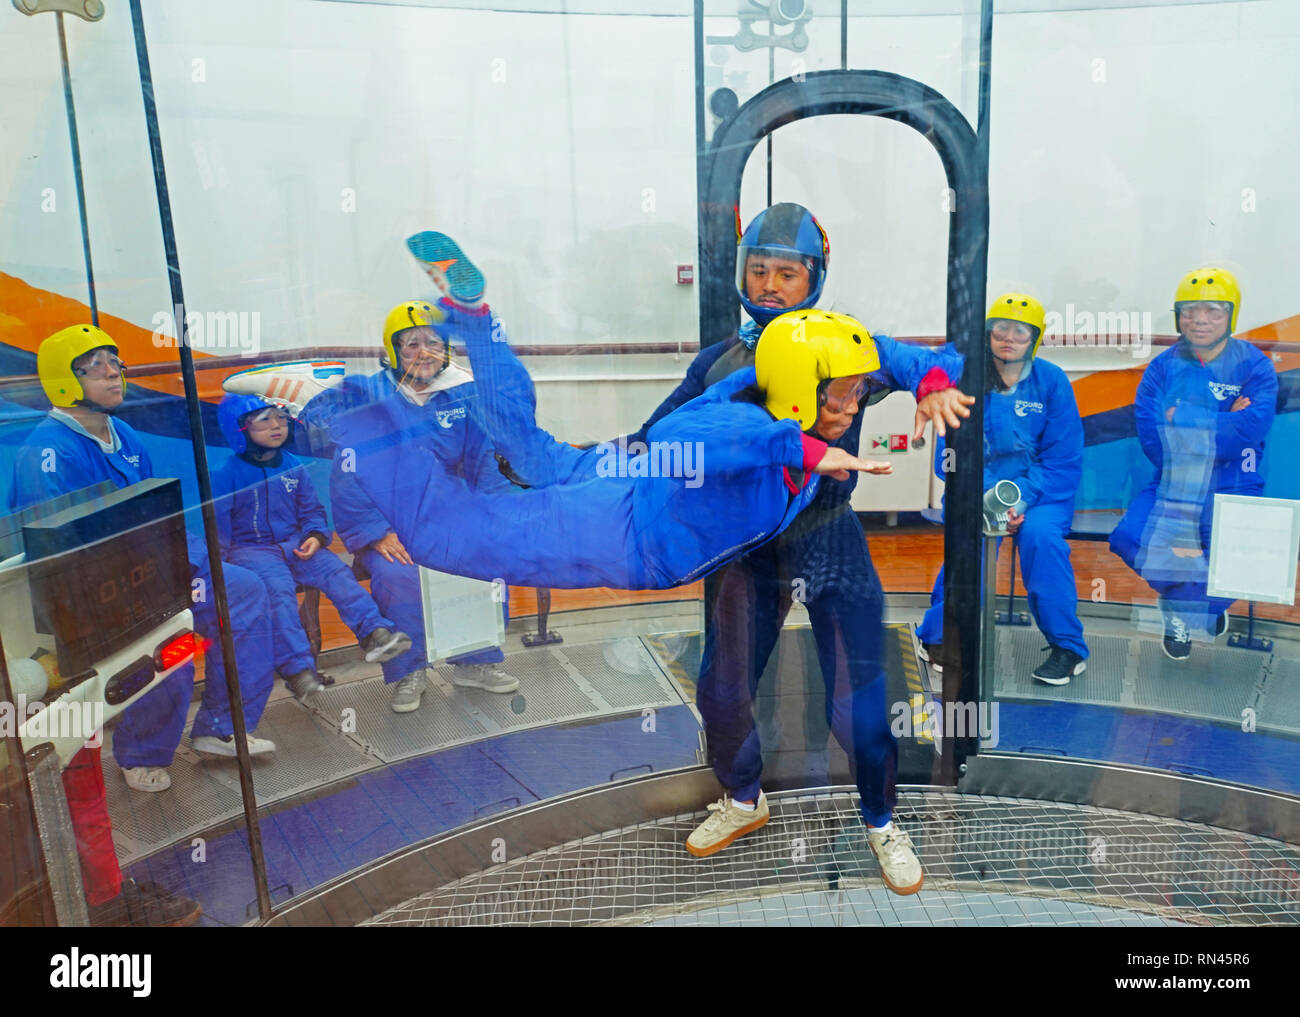 Sky diving simulator Royal Caribbean Lines mega cruise ship Quantum of the Seas. Stock Photo